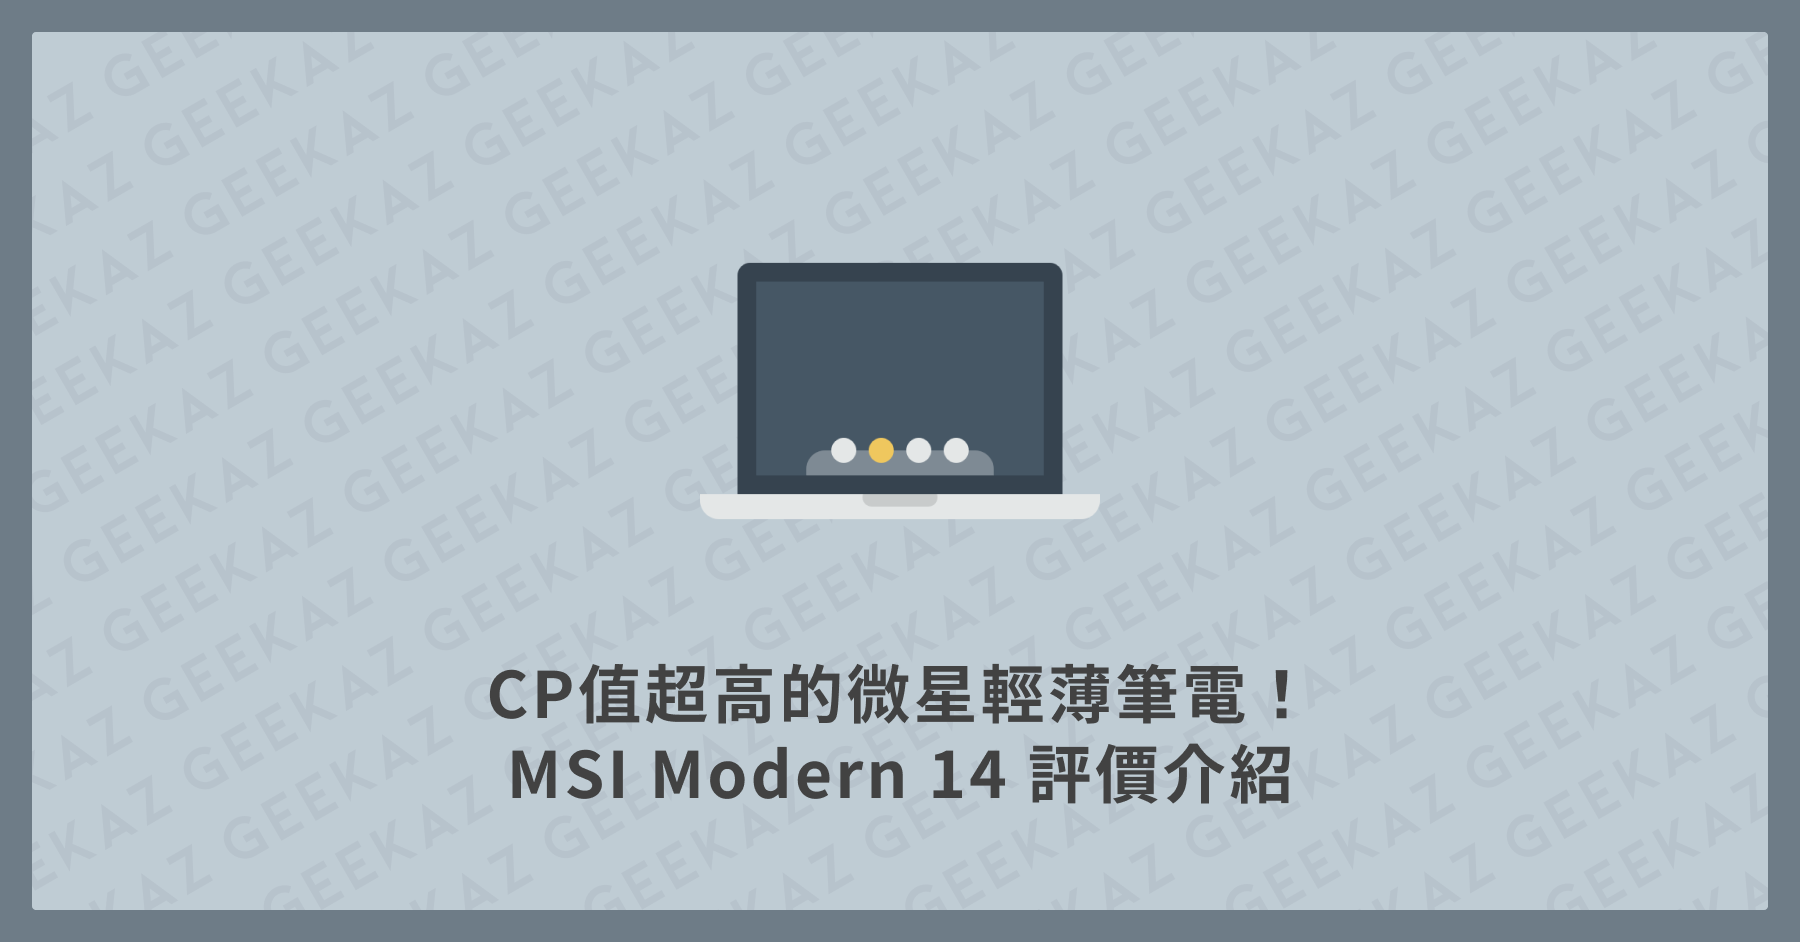 MSI Modern 14 評價